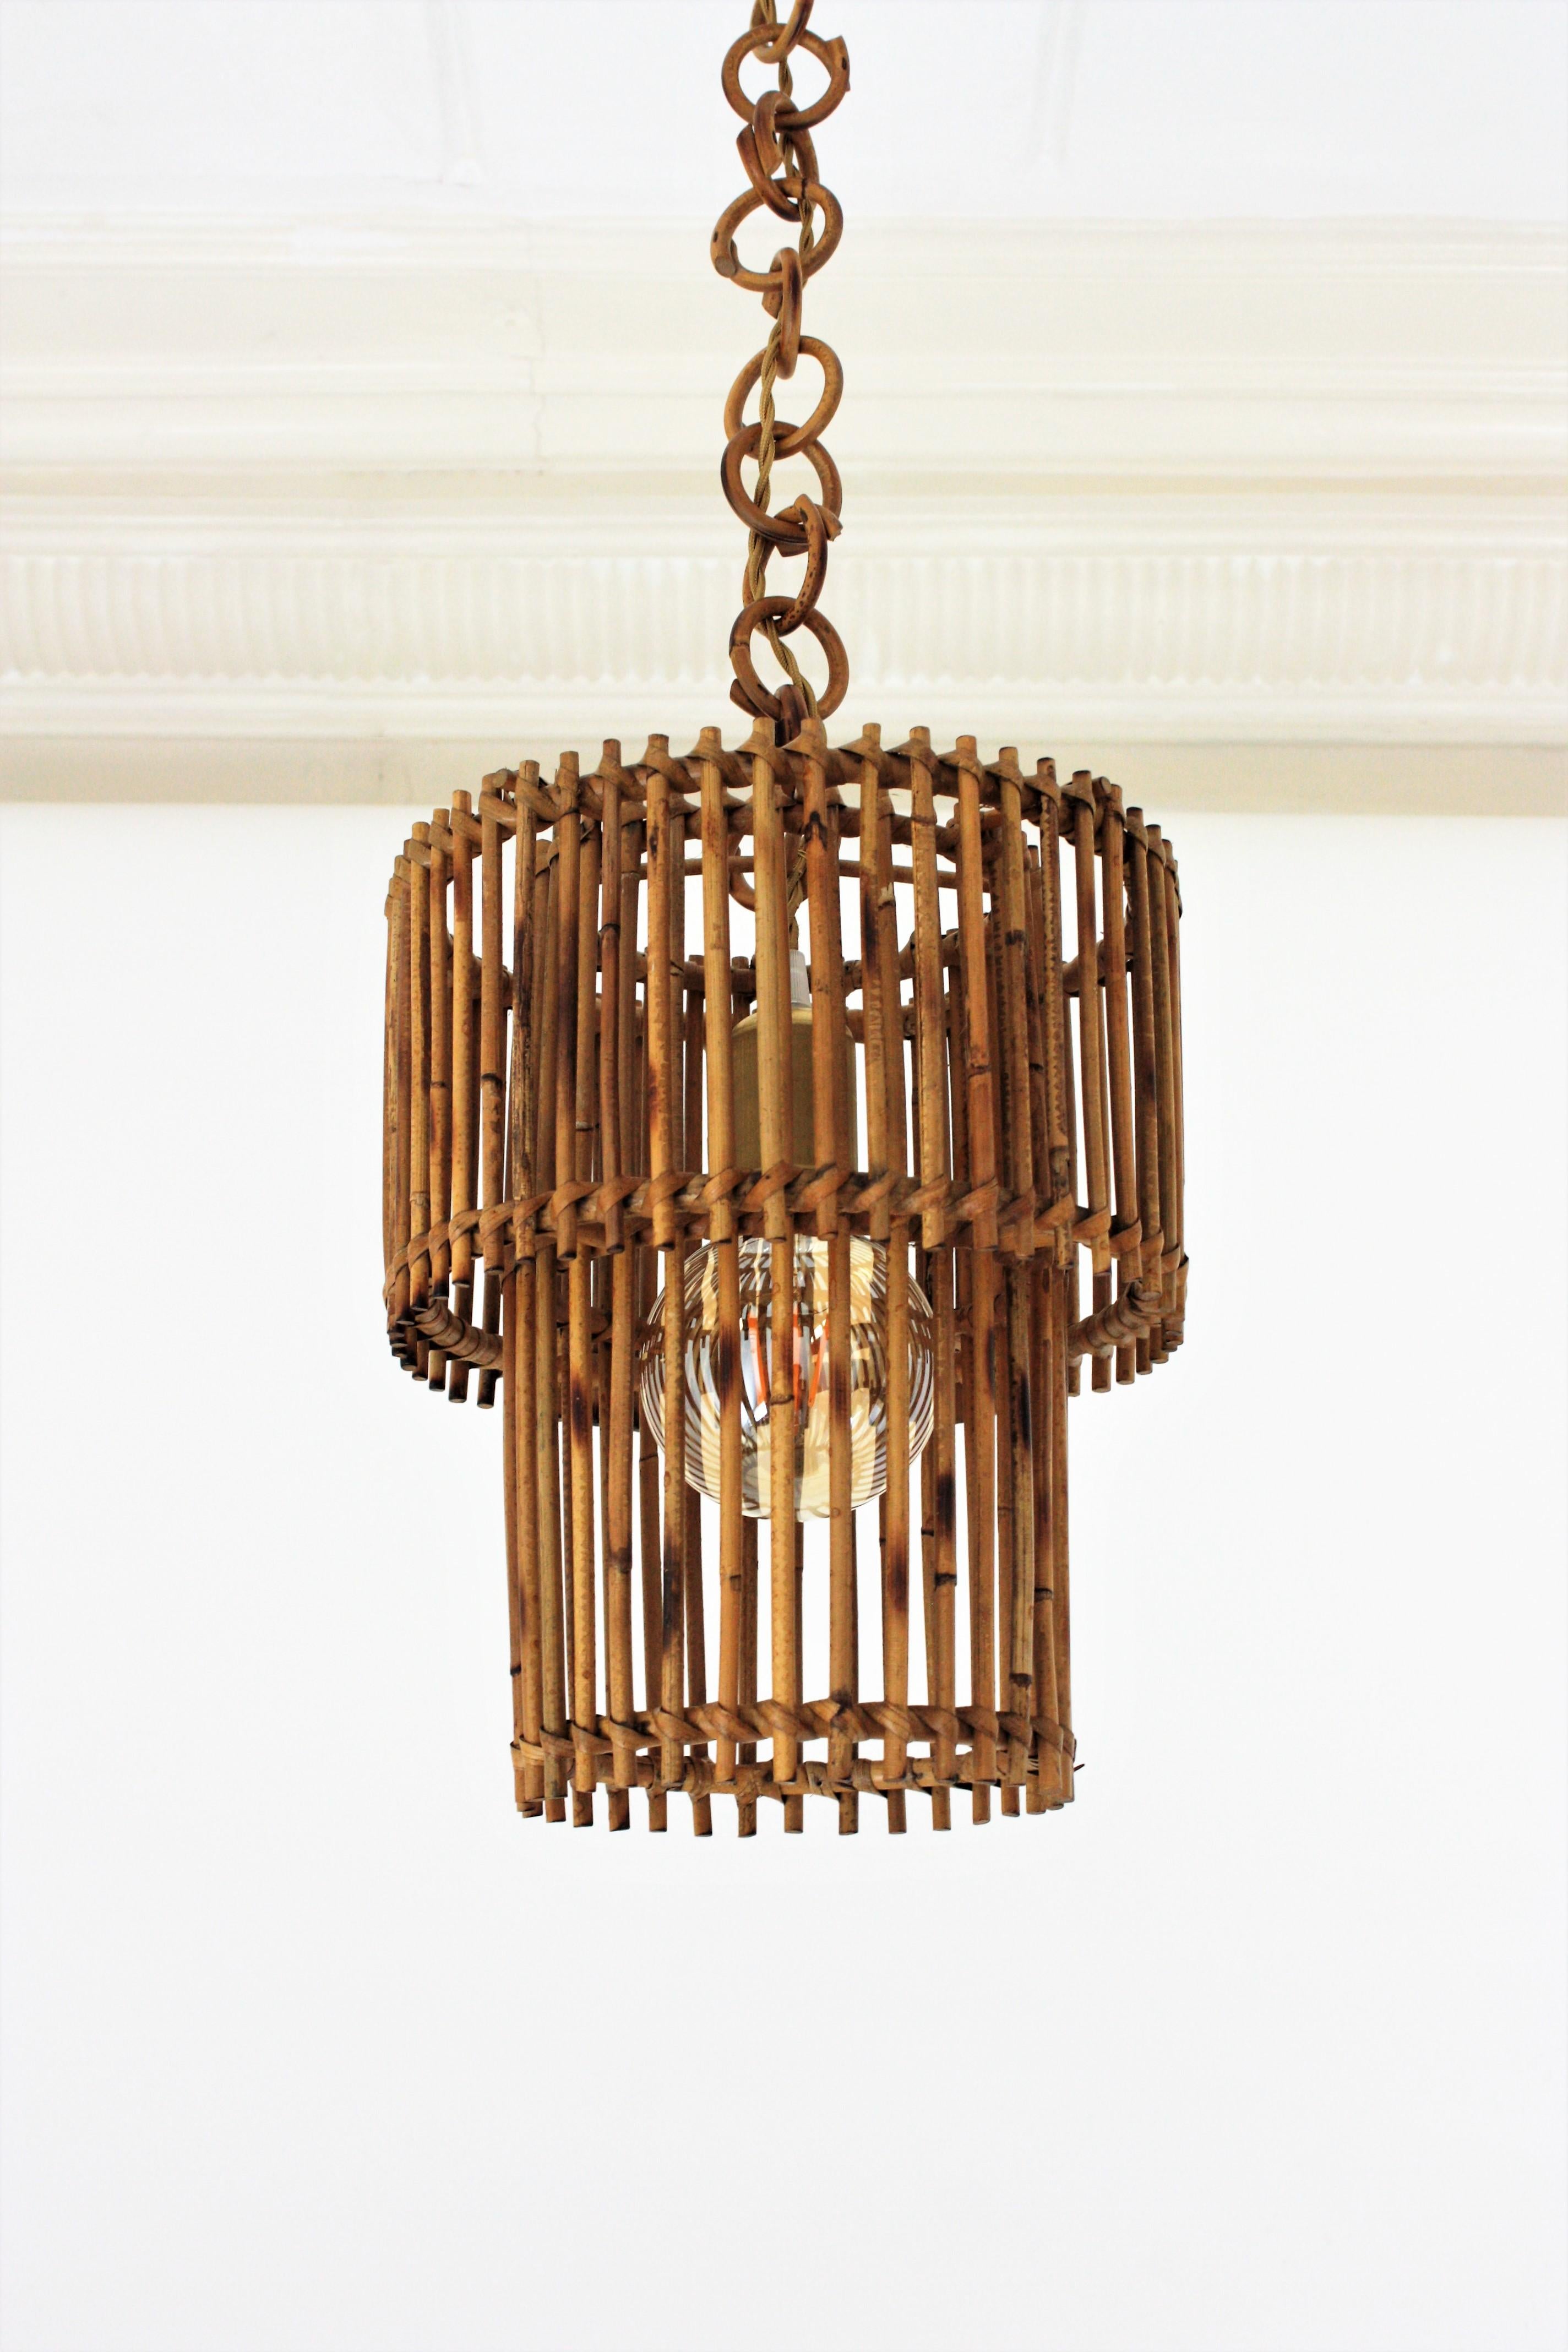  Rattan Cylinder Pendant Hanging Light or Lantern, 1960s For Sale 1